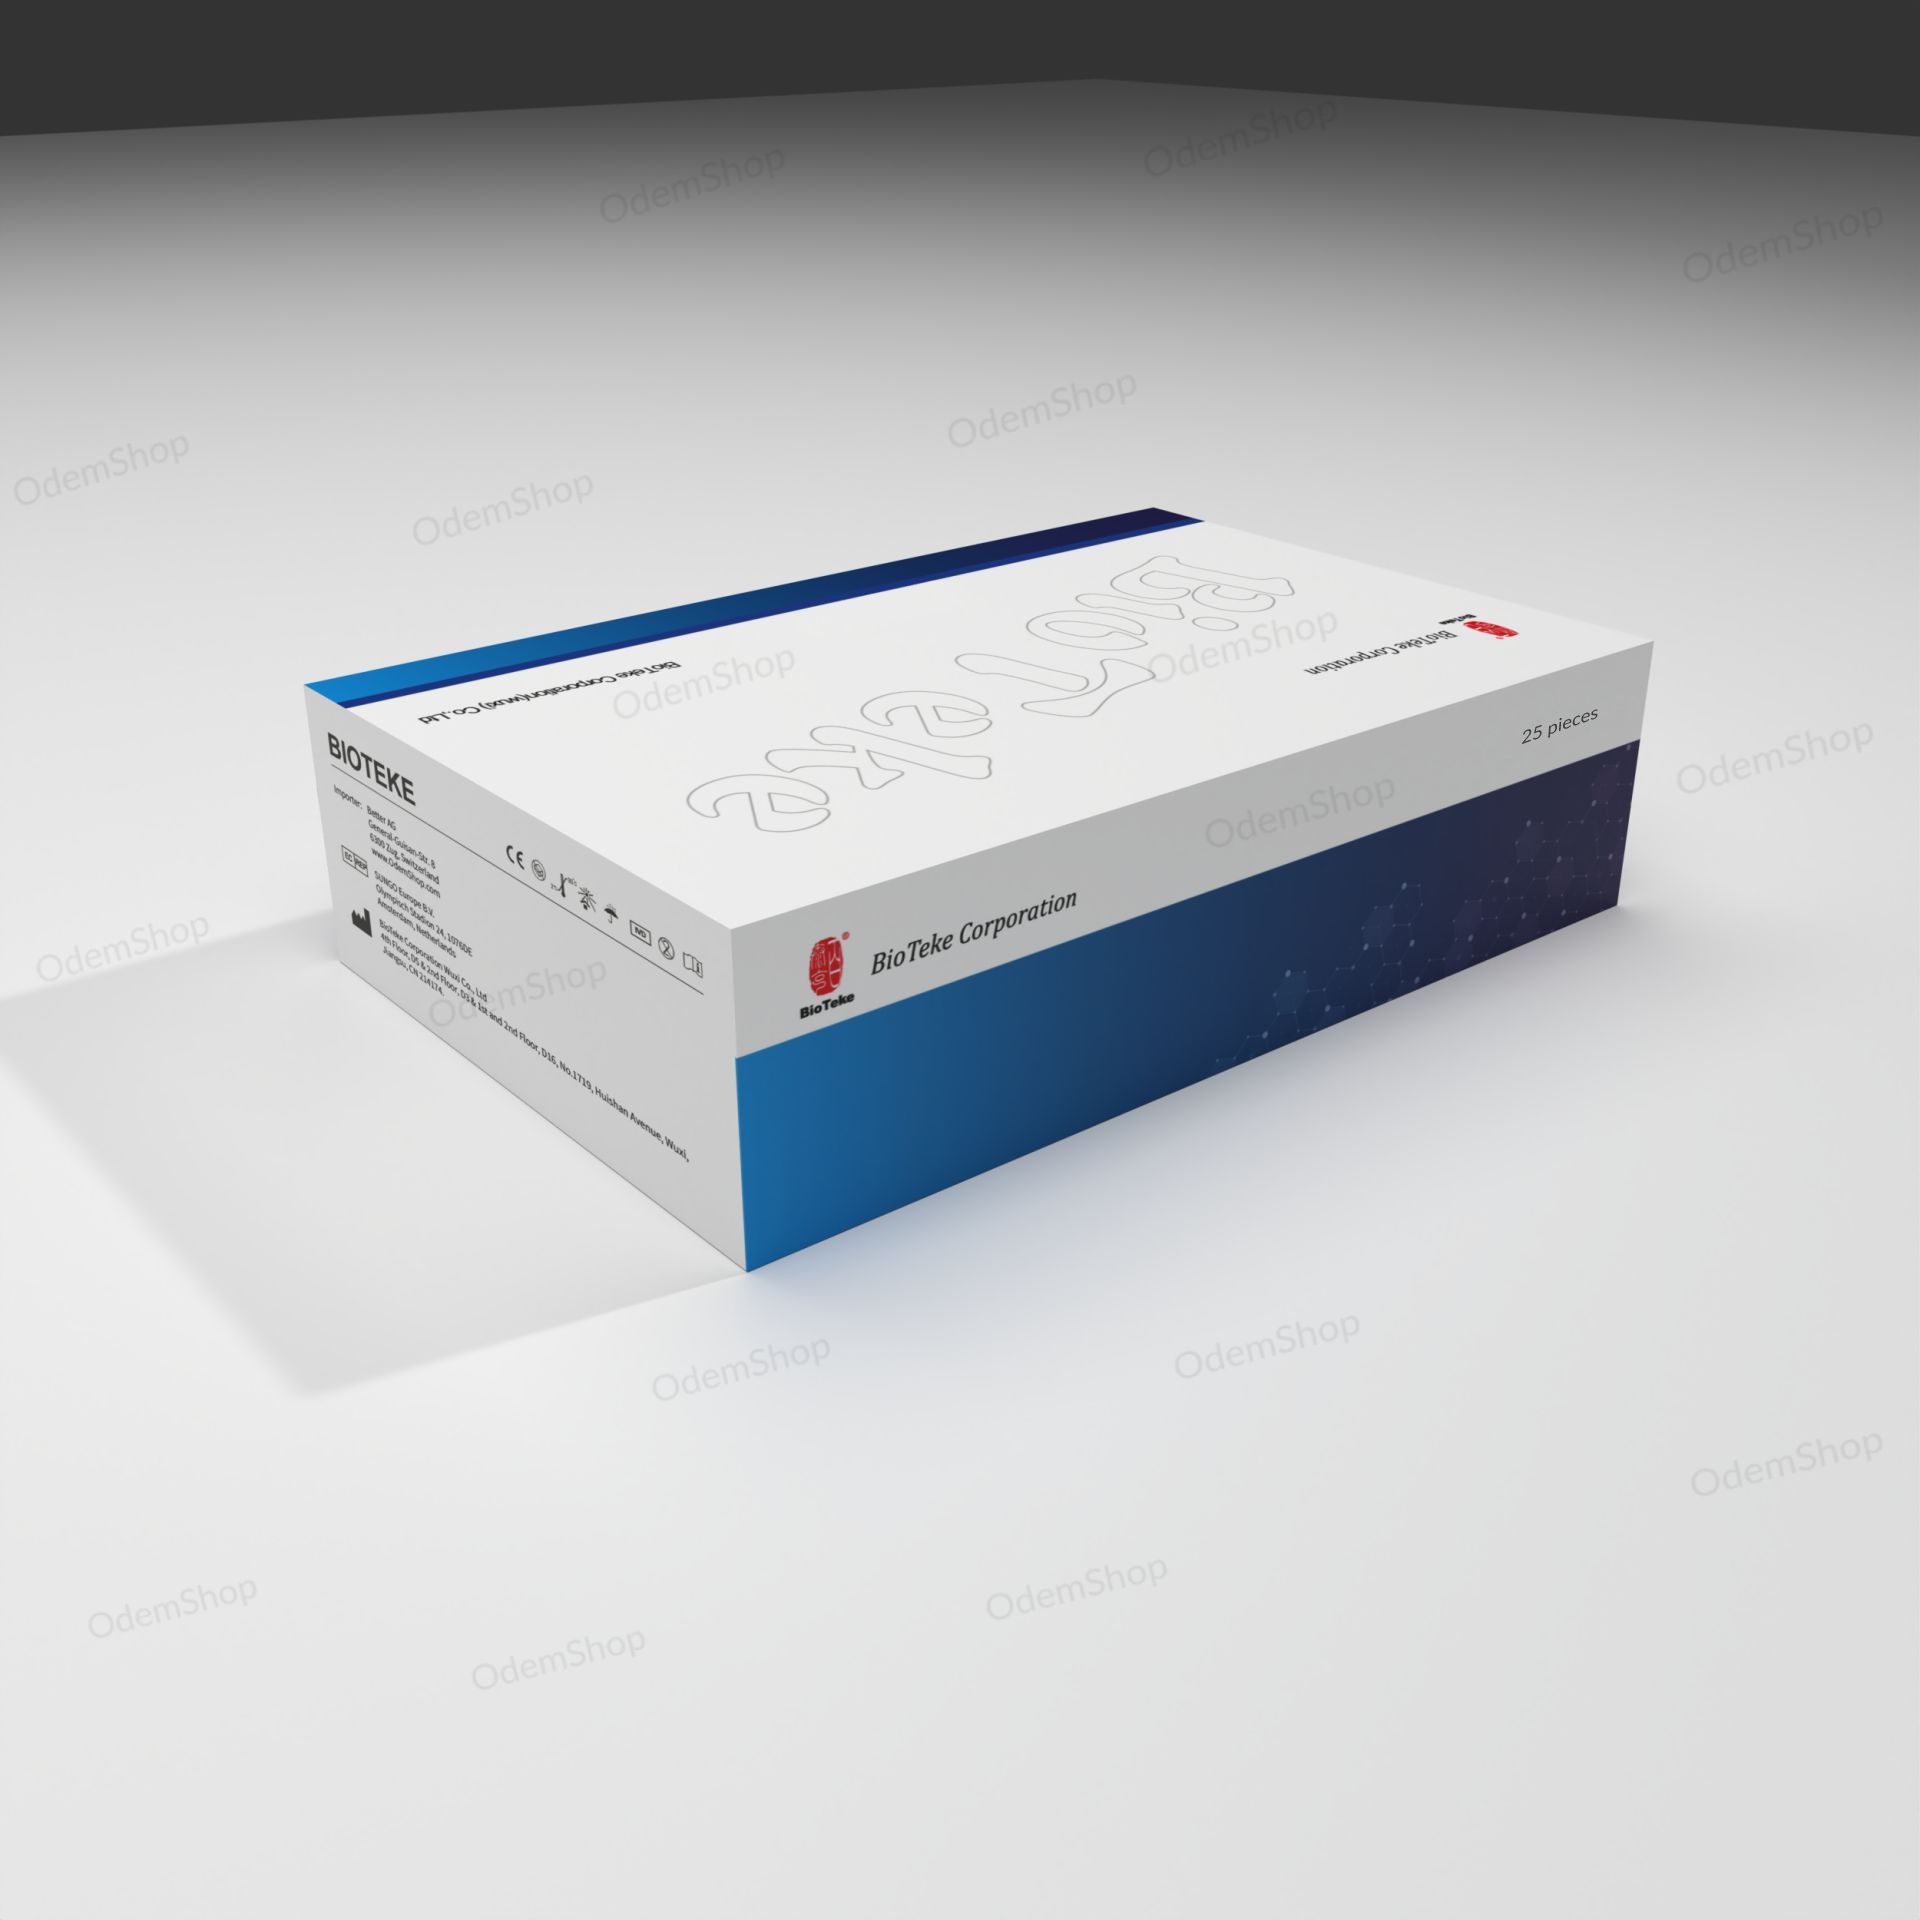 Bioteke sars-cov-2 antigen test kit